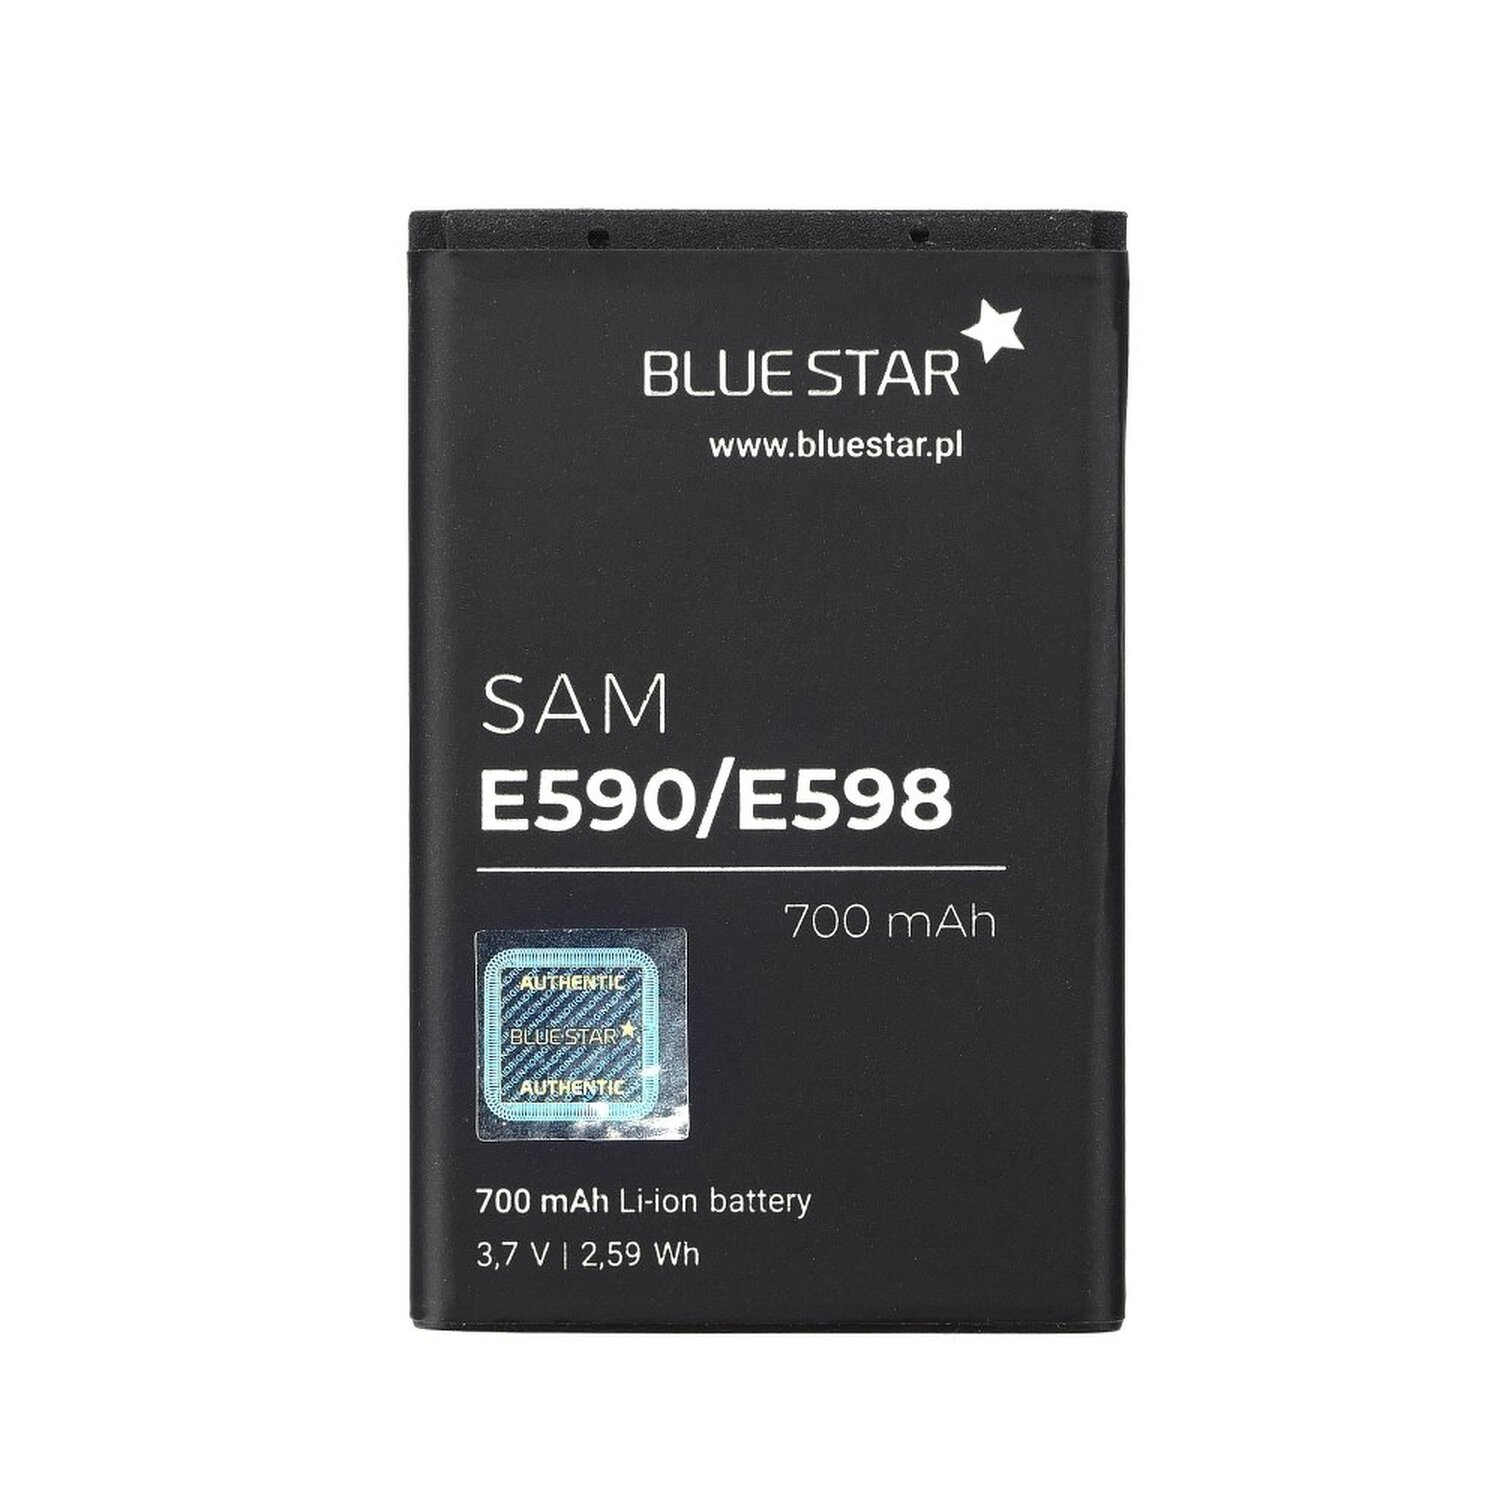 BLUESTAR Akku Li-Ion E598 / E590 / Samsung Handyakku E790i für